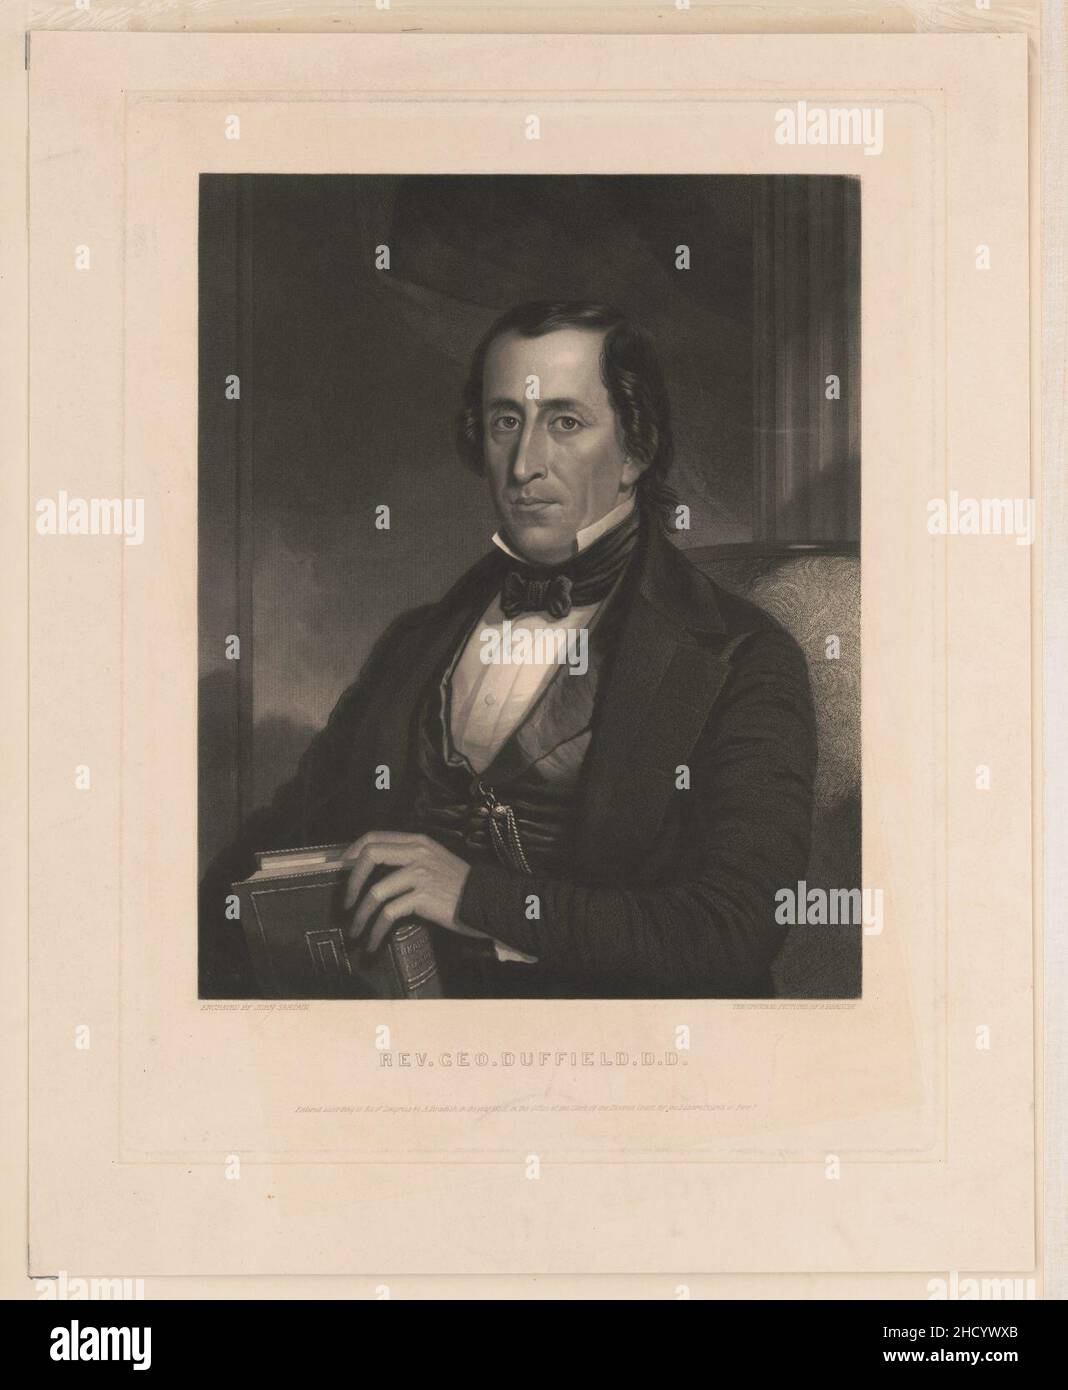 Rev. Geográfica D.D. Duffield - Grabado por John Sartain ; la imagen original de A. Bradish. Foto de stock